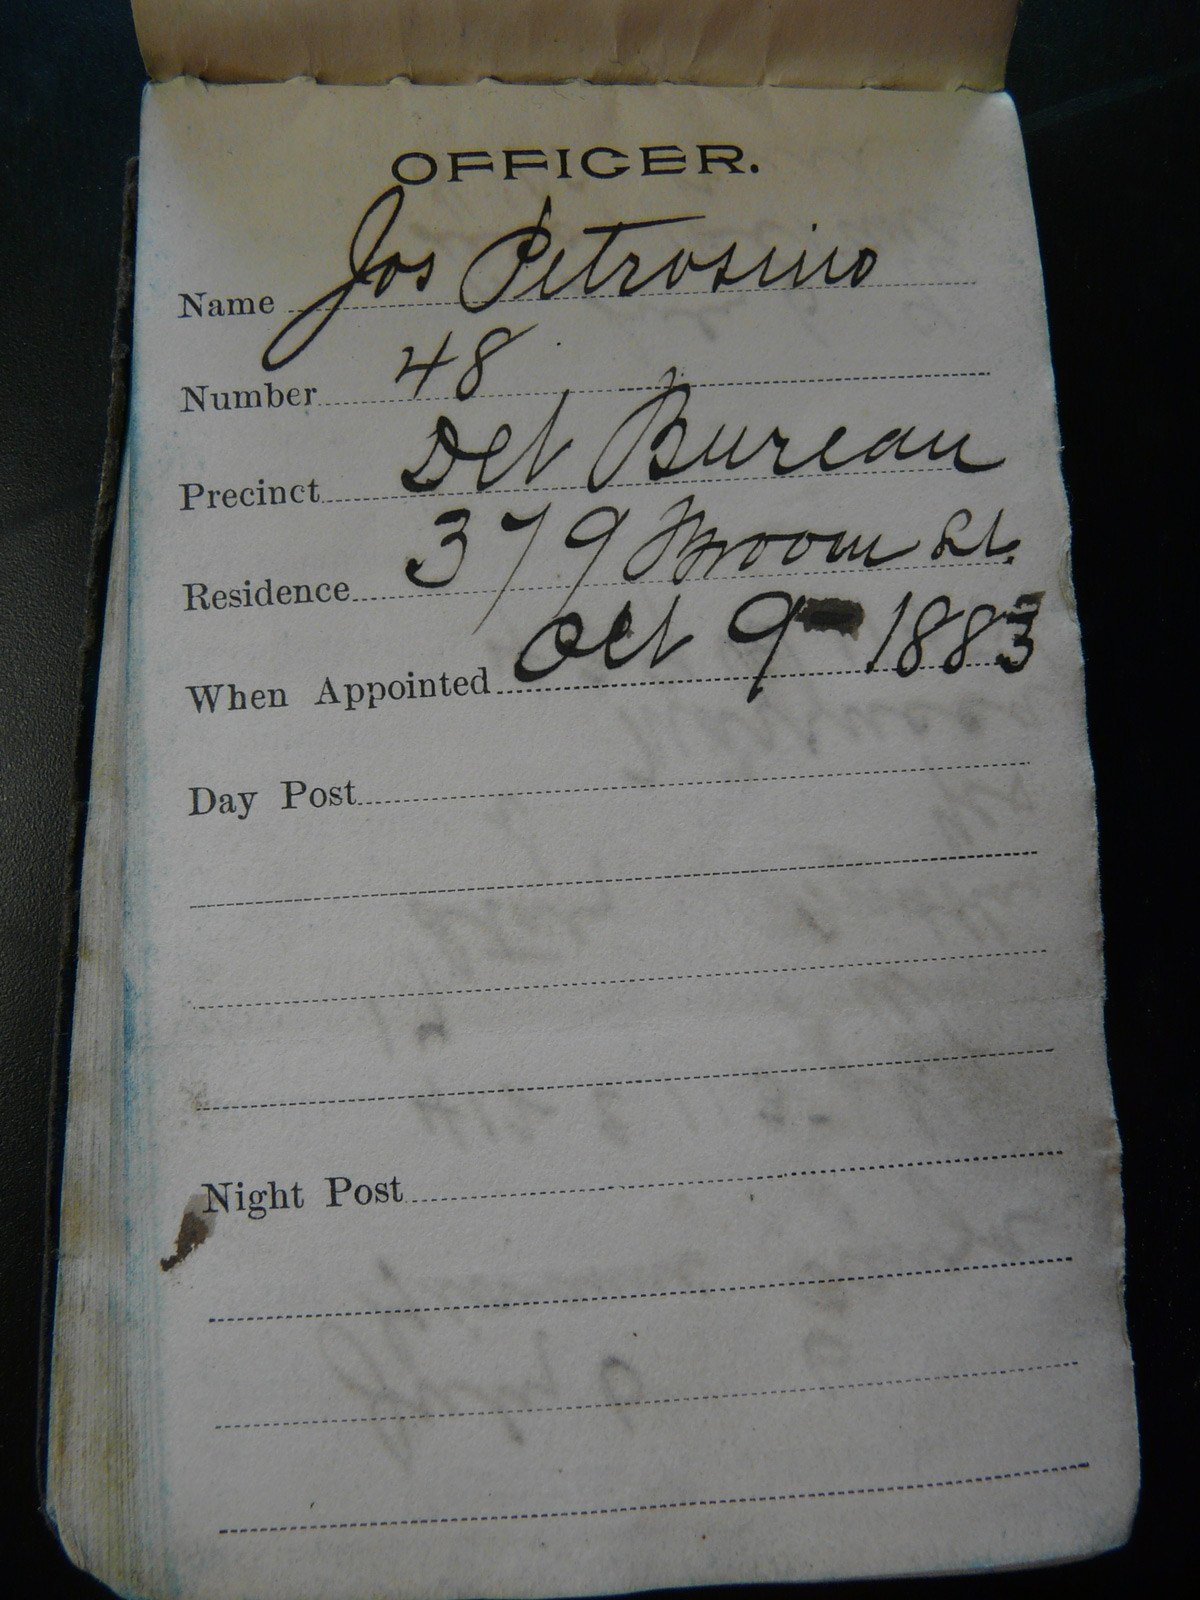 Petrosino's 1883 pocket-book